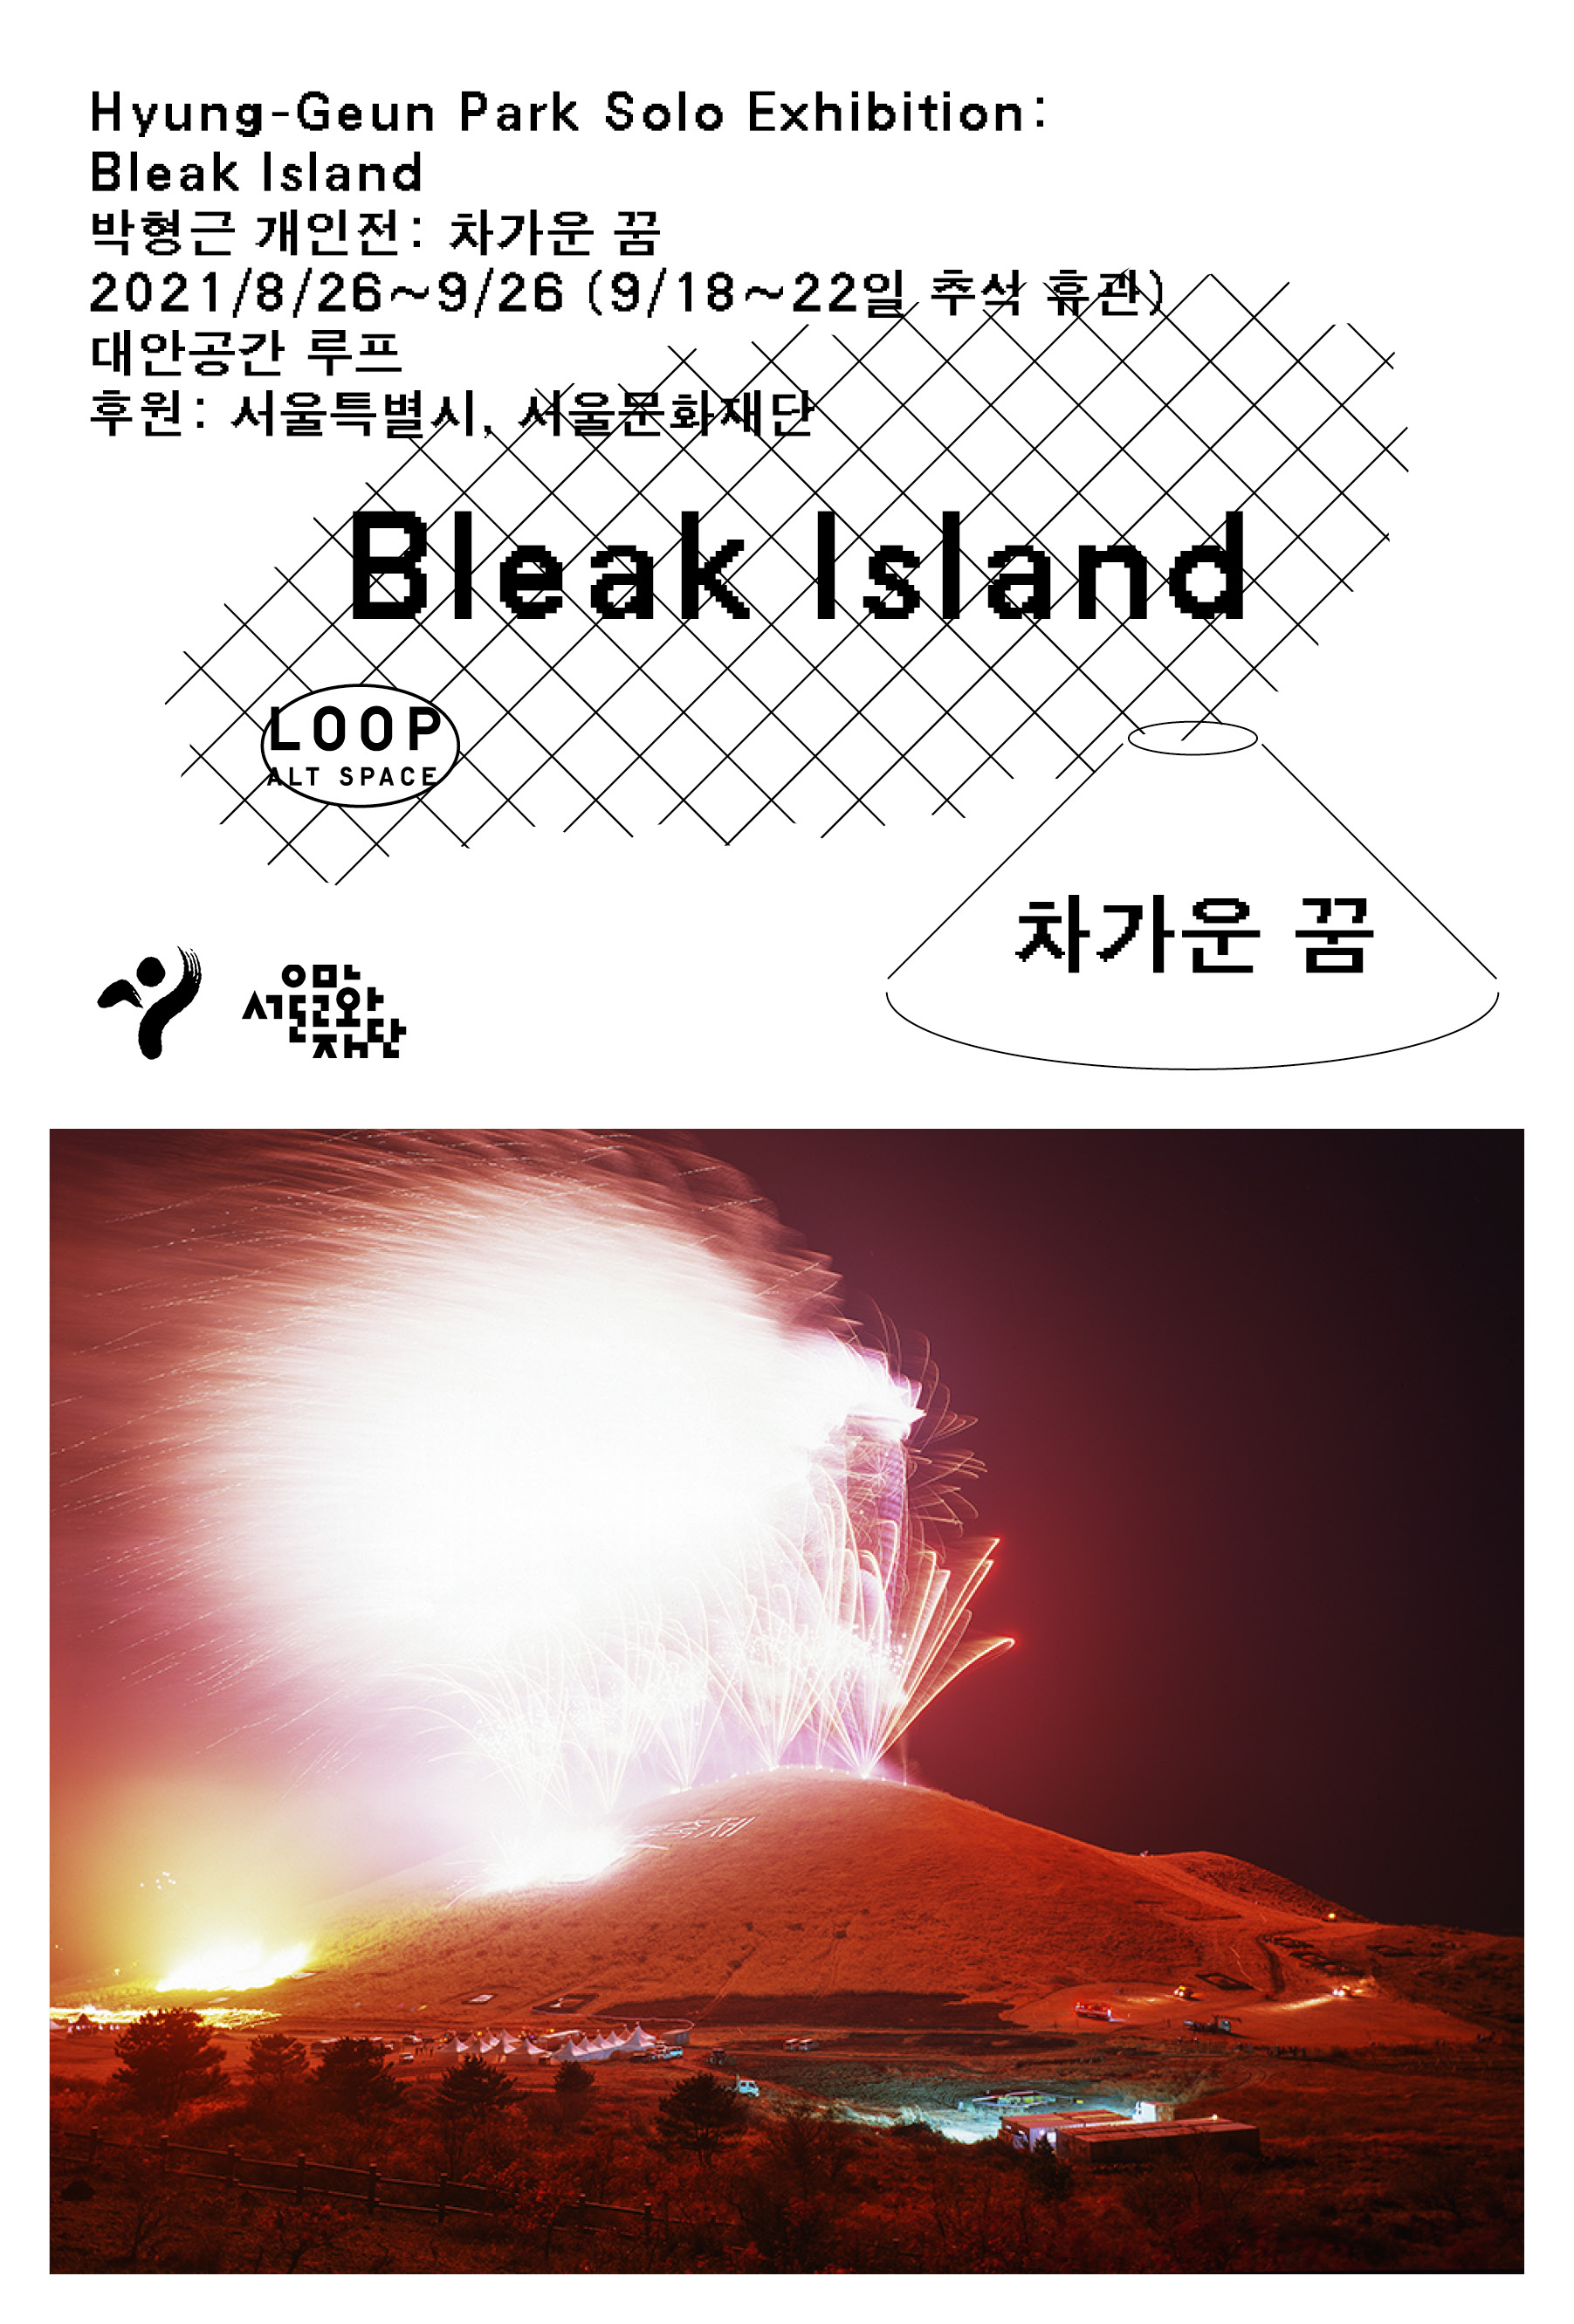 Hyung-Geun Park Solo Exhibition: Bleak Island